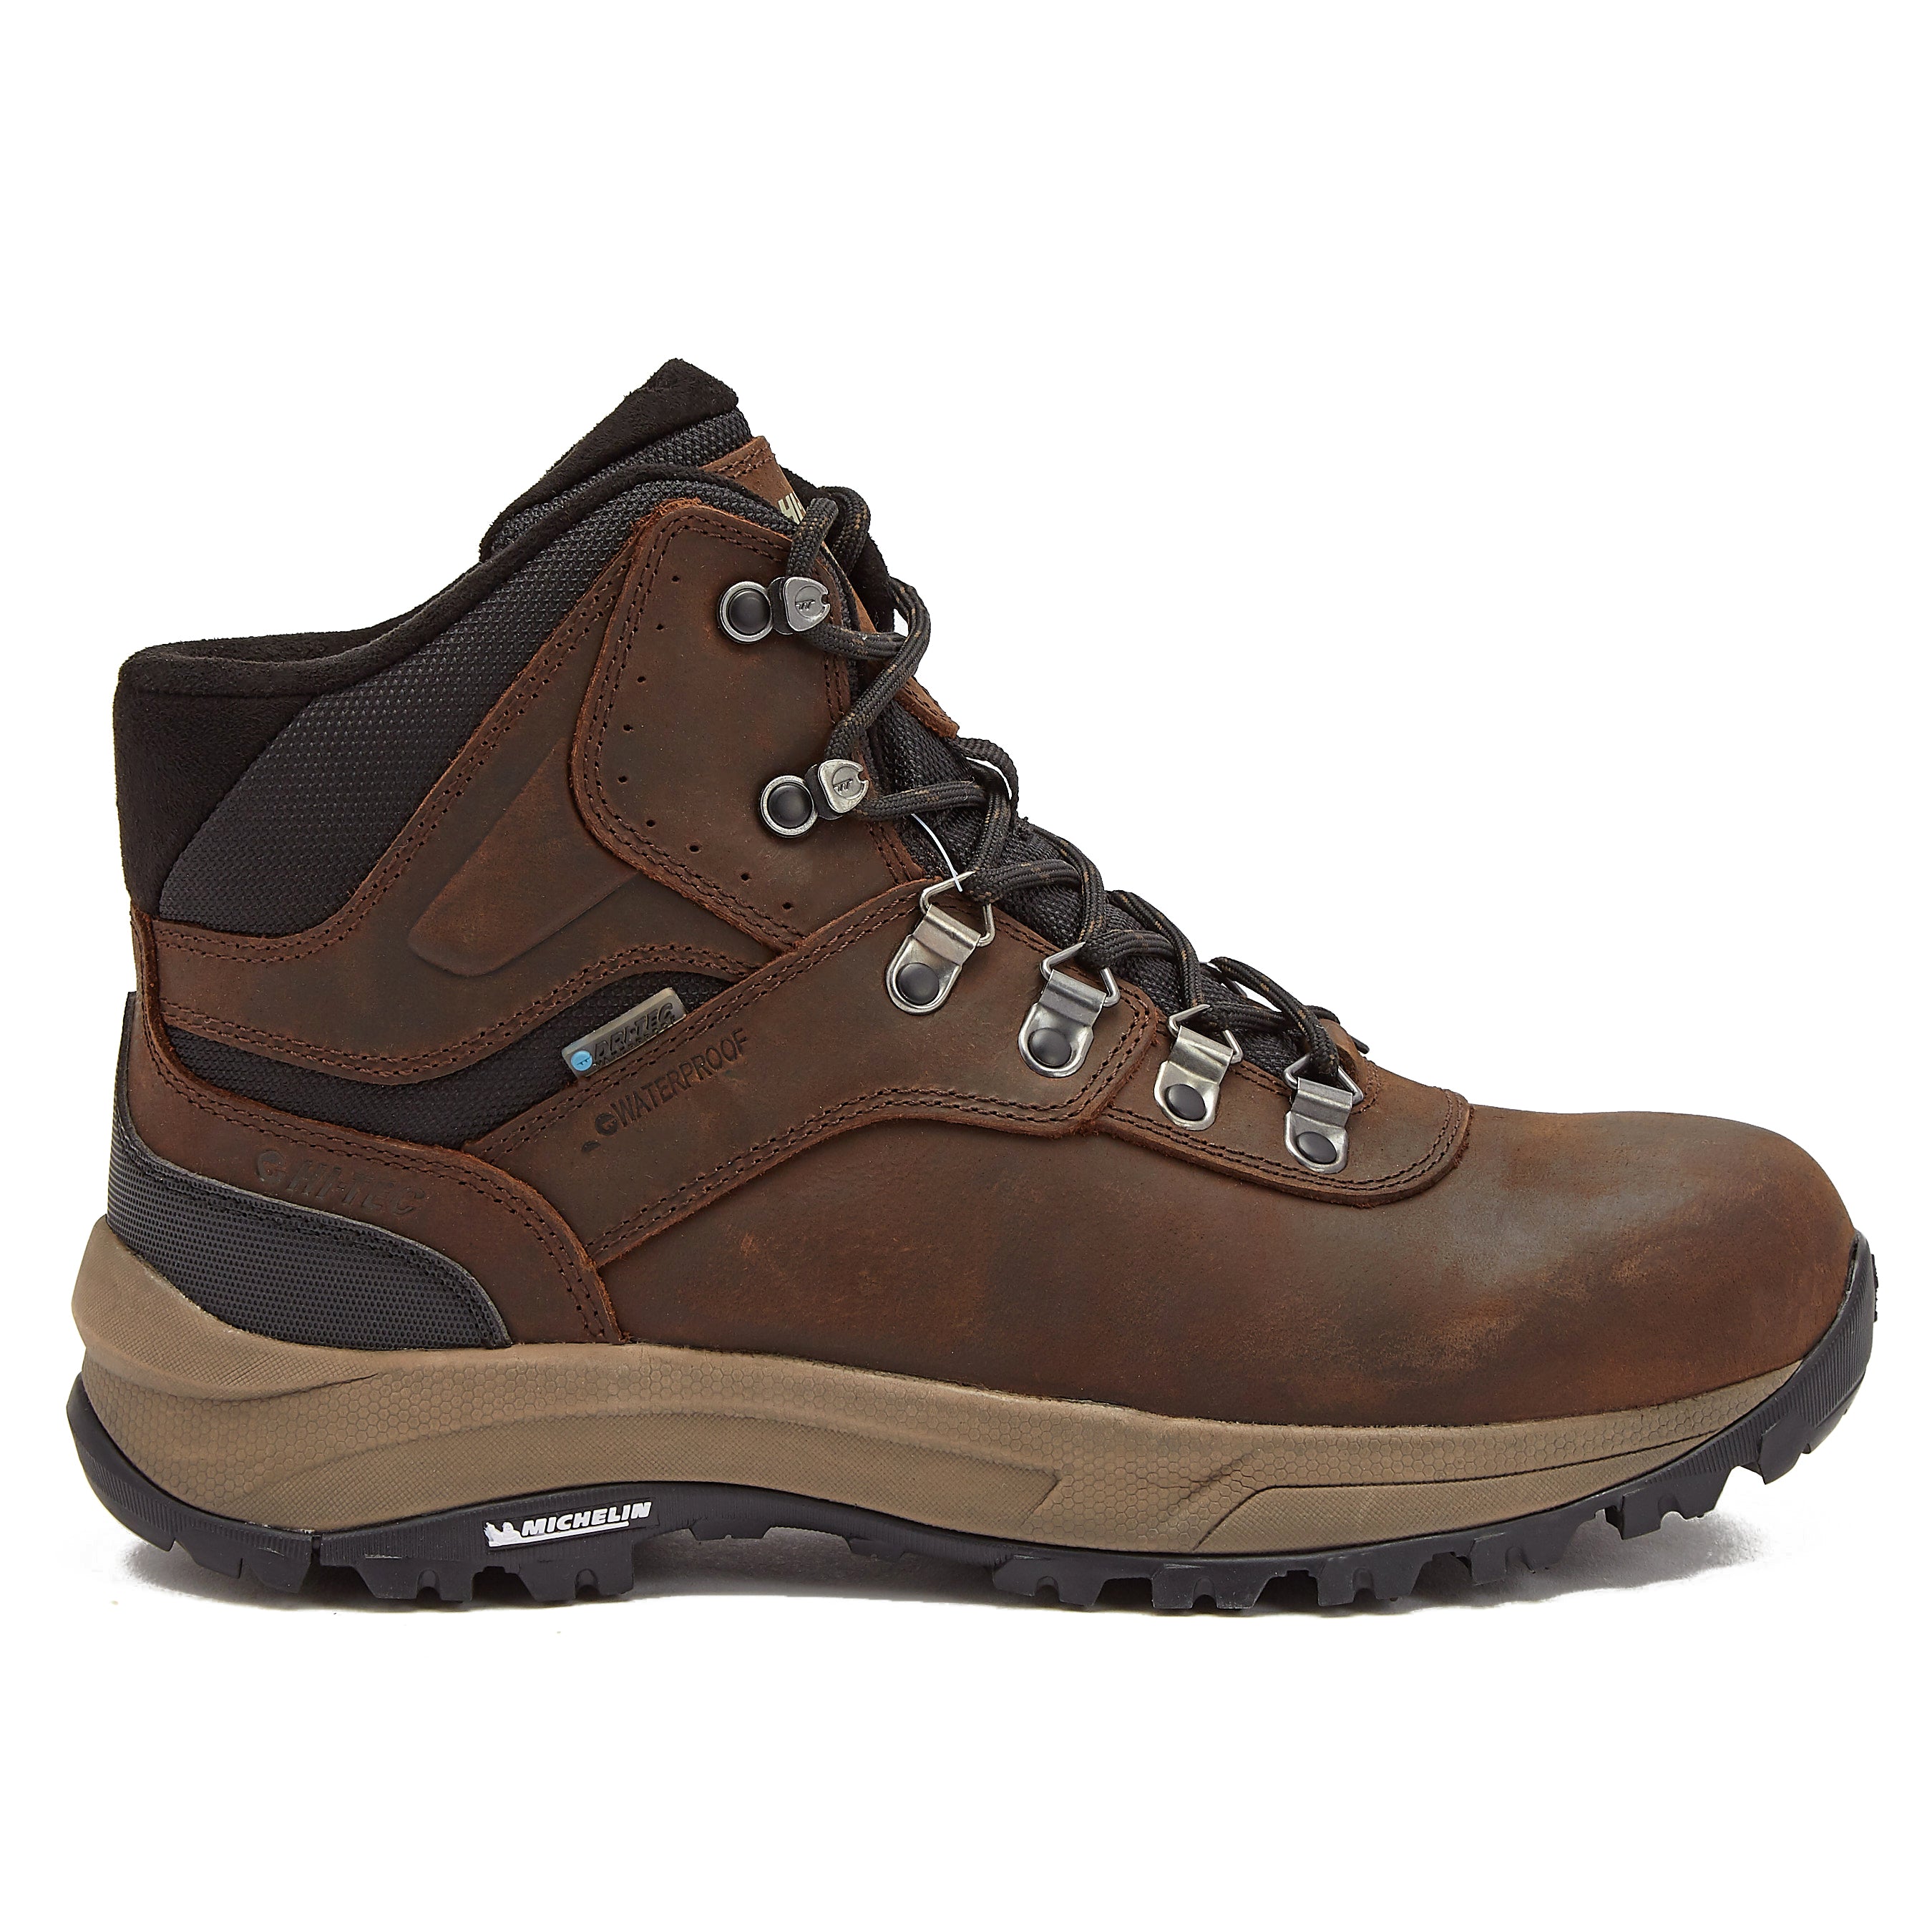  HI-TEC Yosemite WP Mid Waterproof Hiking Boots for Men,  Lightweight Breathable Outdoor Trekking Shoes - Dark Green, 7.5 Medium